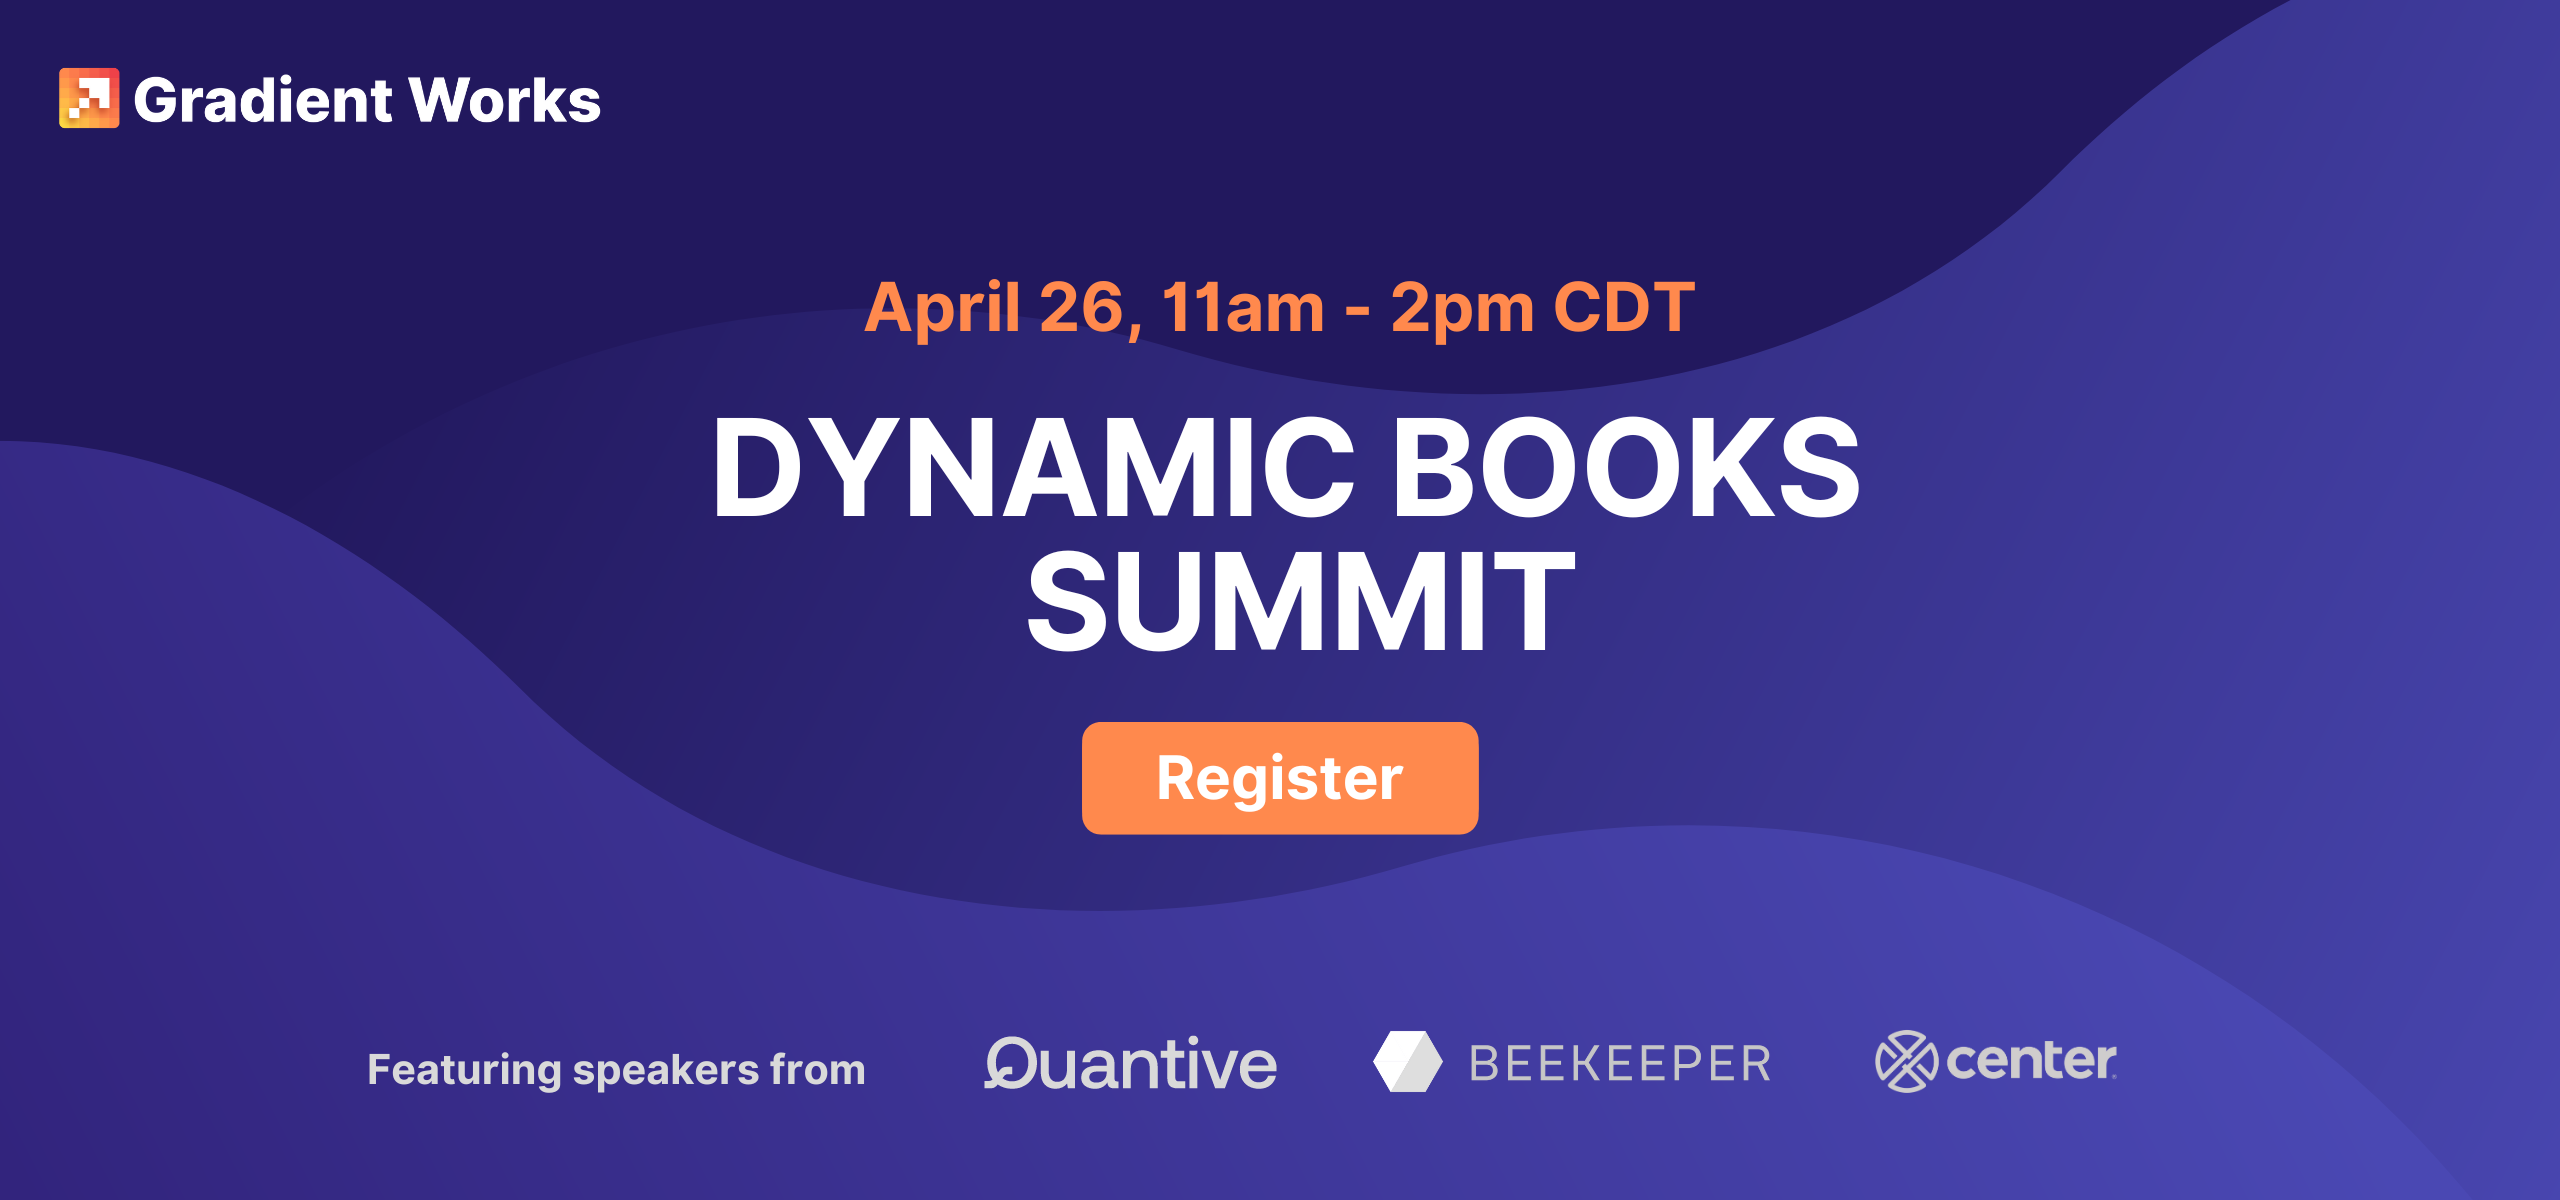 Dynamic Books Summit (1280 × 400 px)